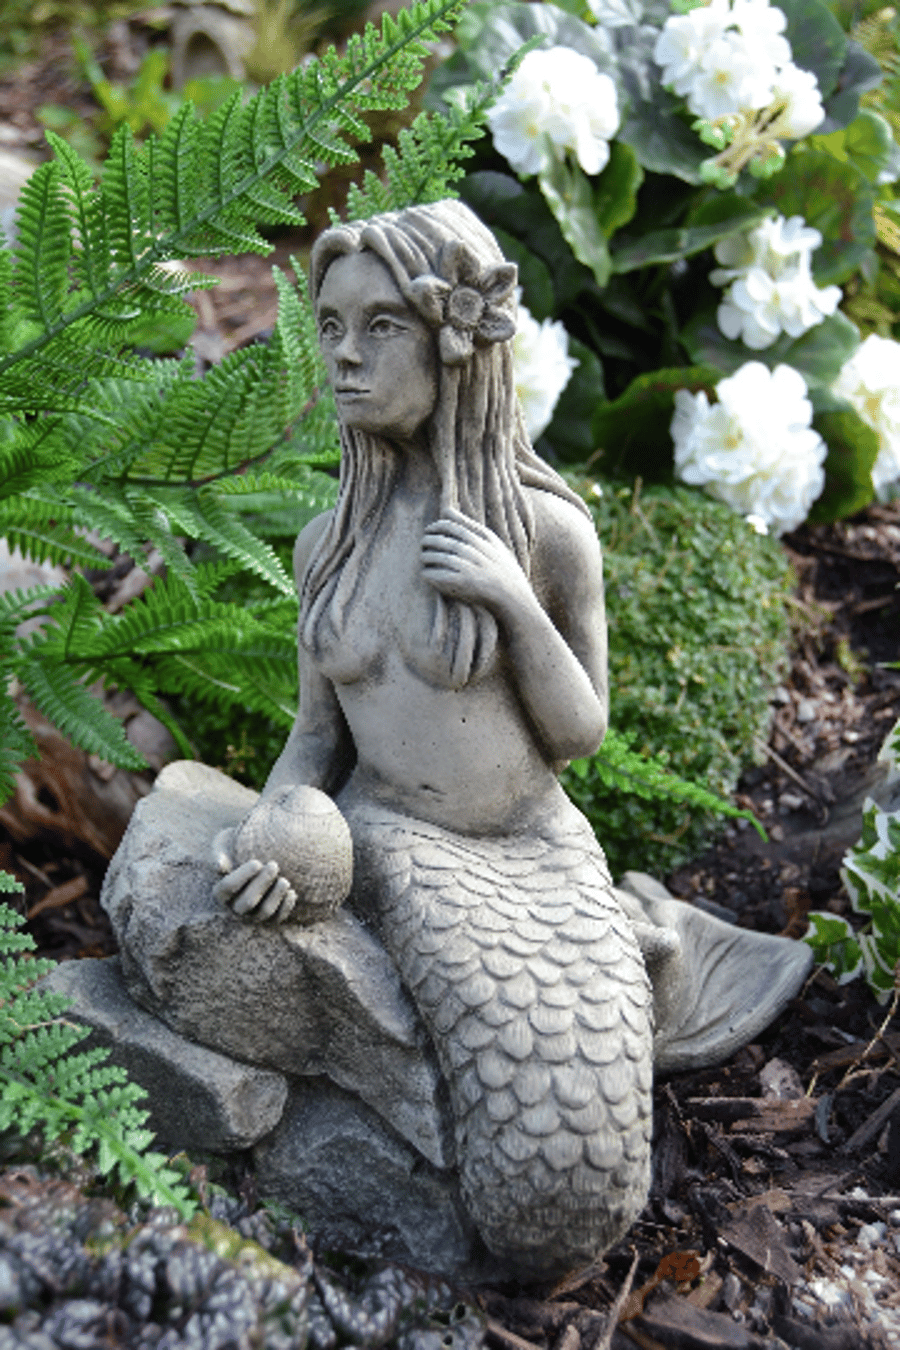 Eliana the Mermaid Stone Garden Ornament